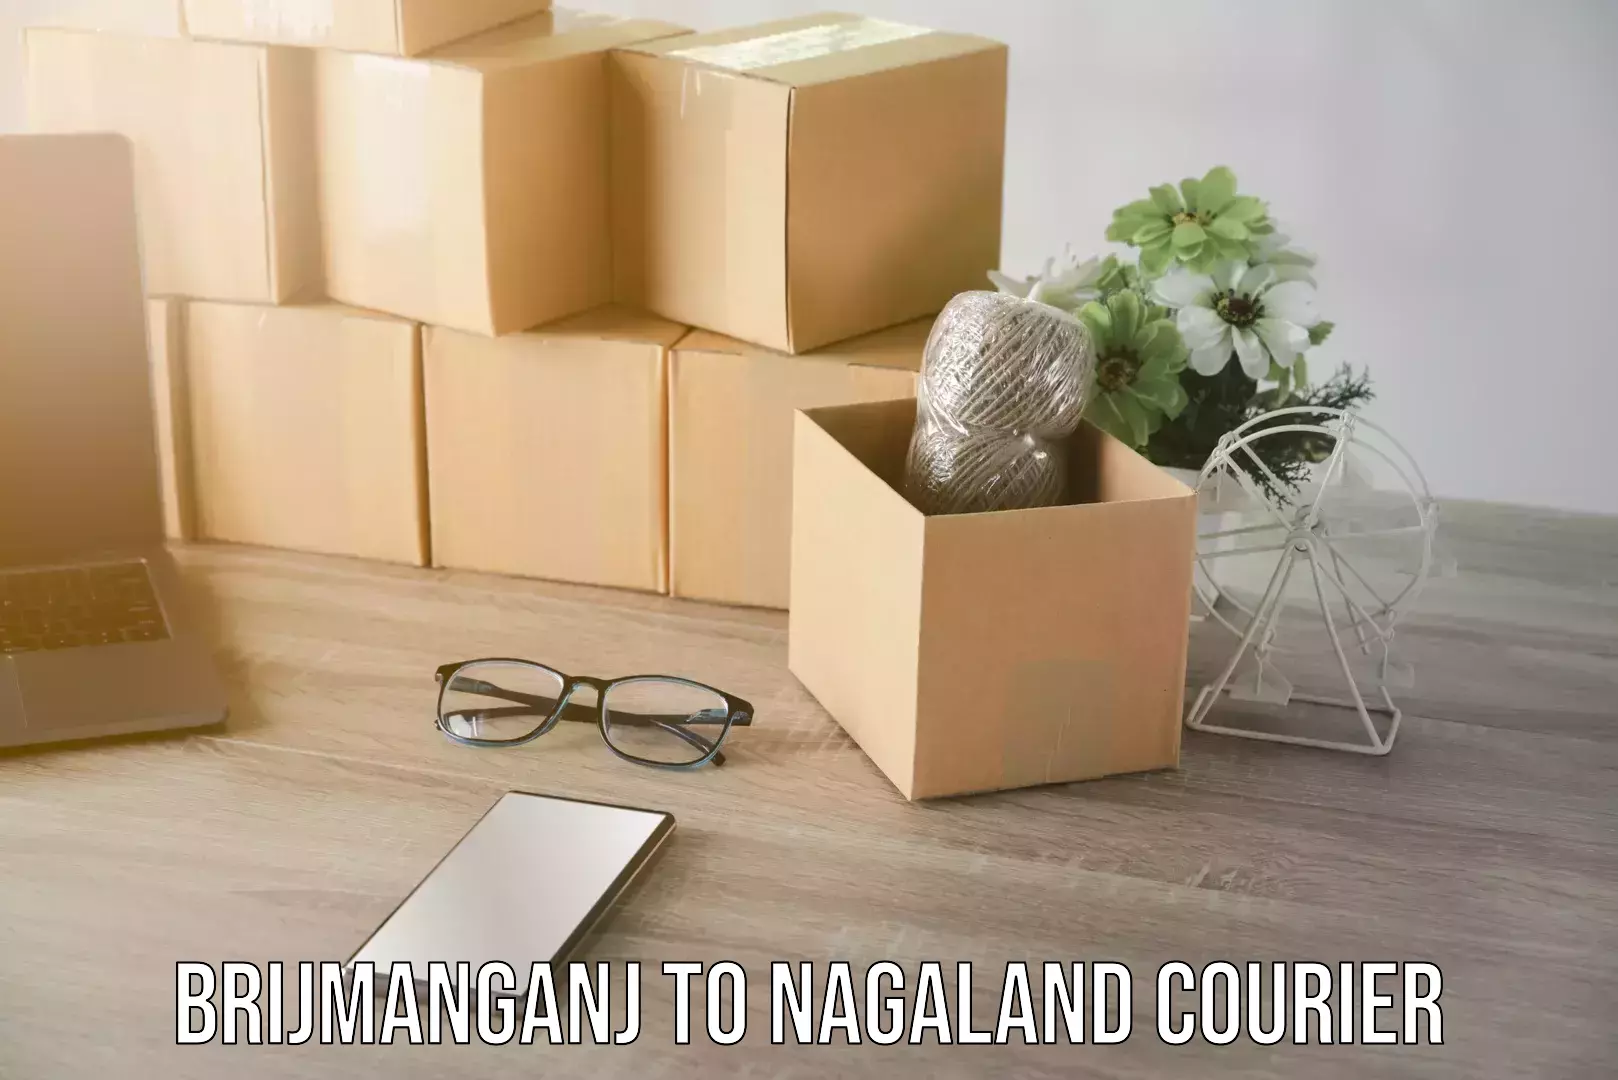 Doorstep delivery service Brijmanganj to Nagaland